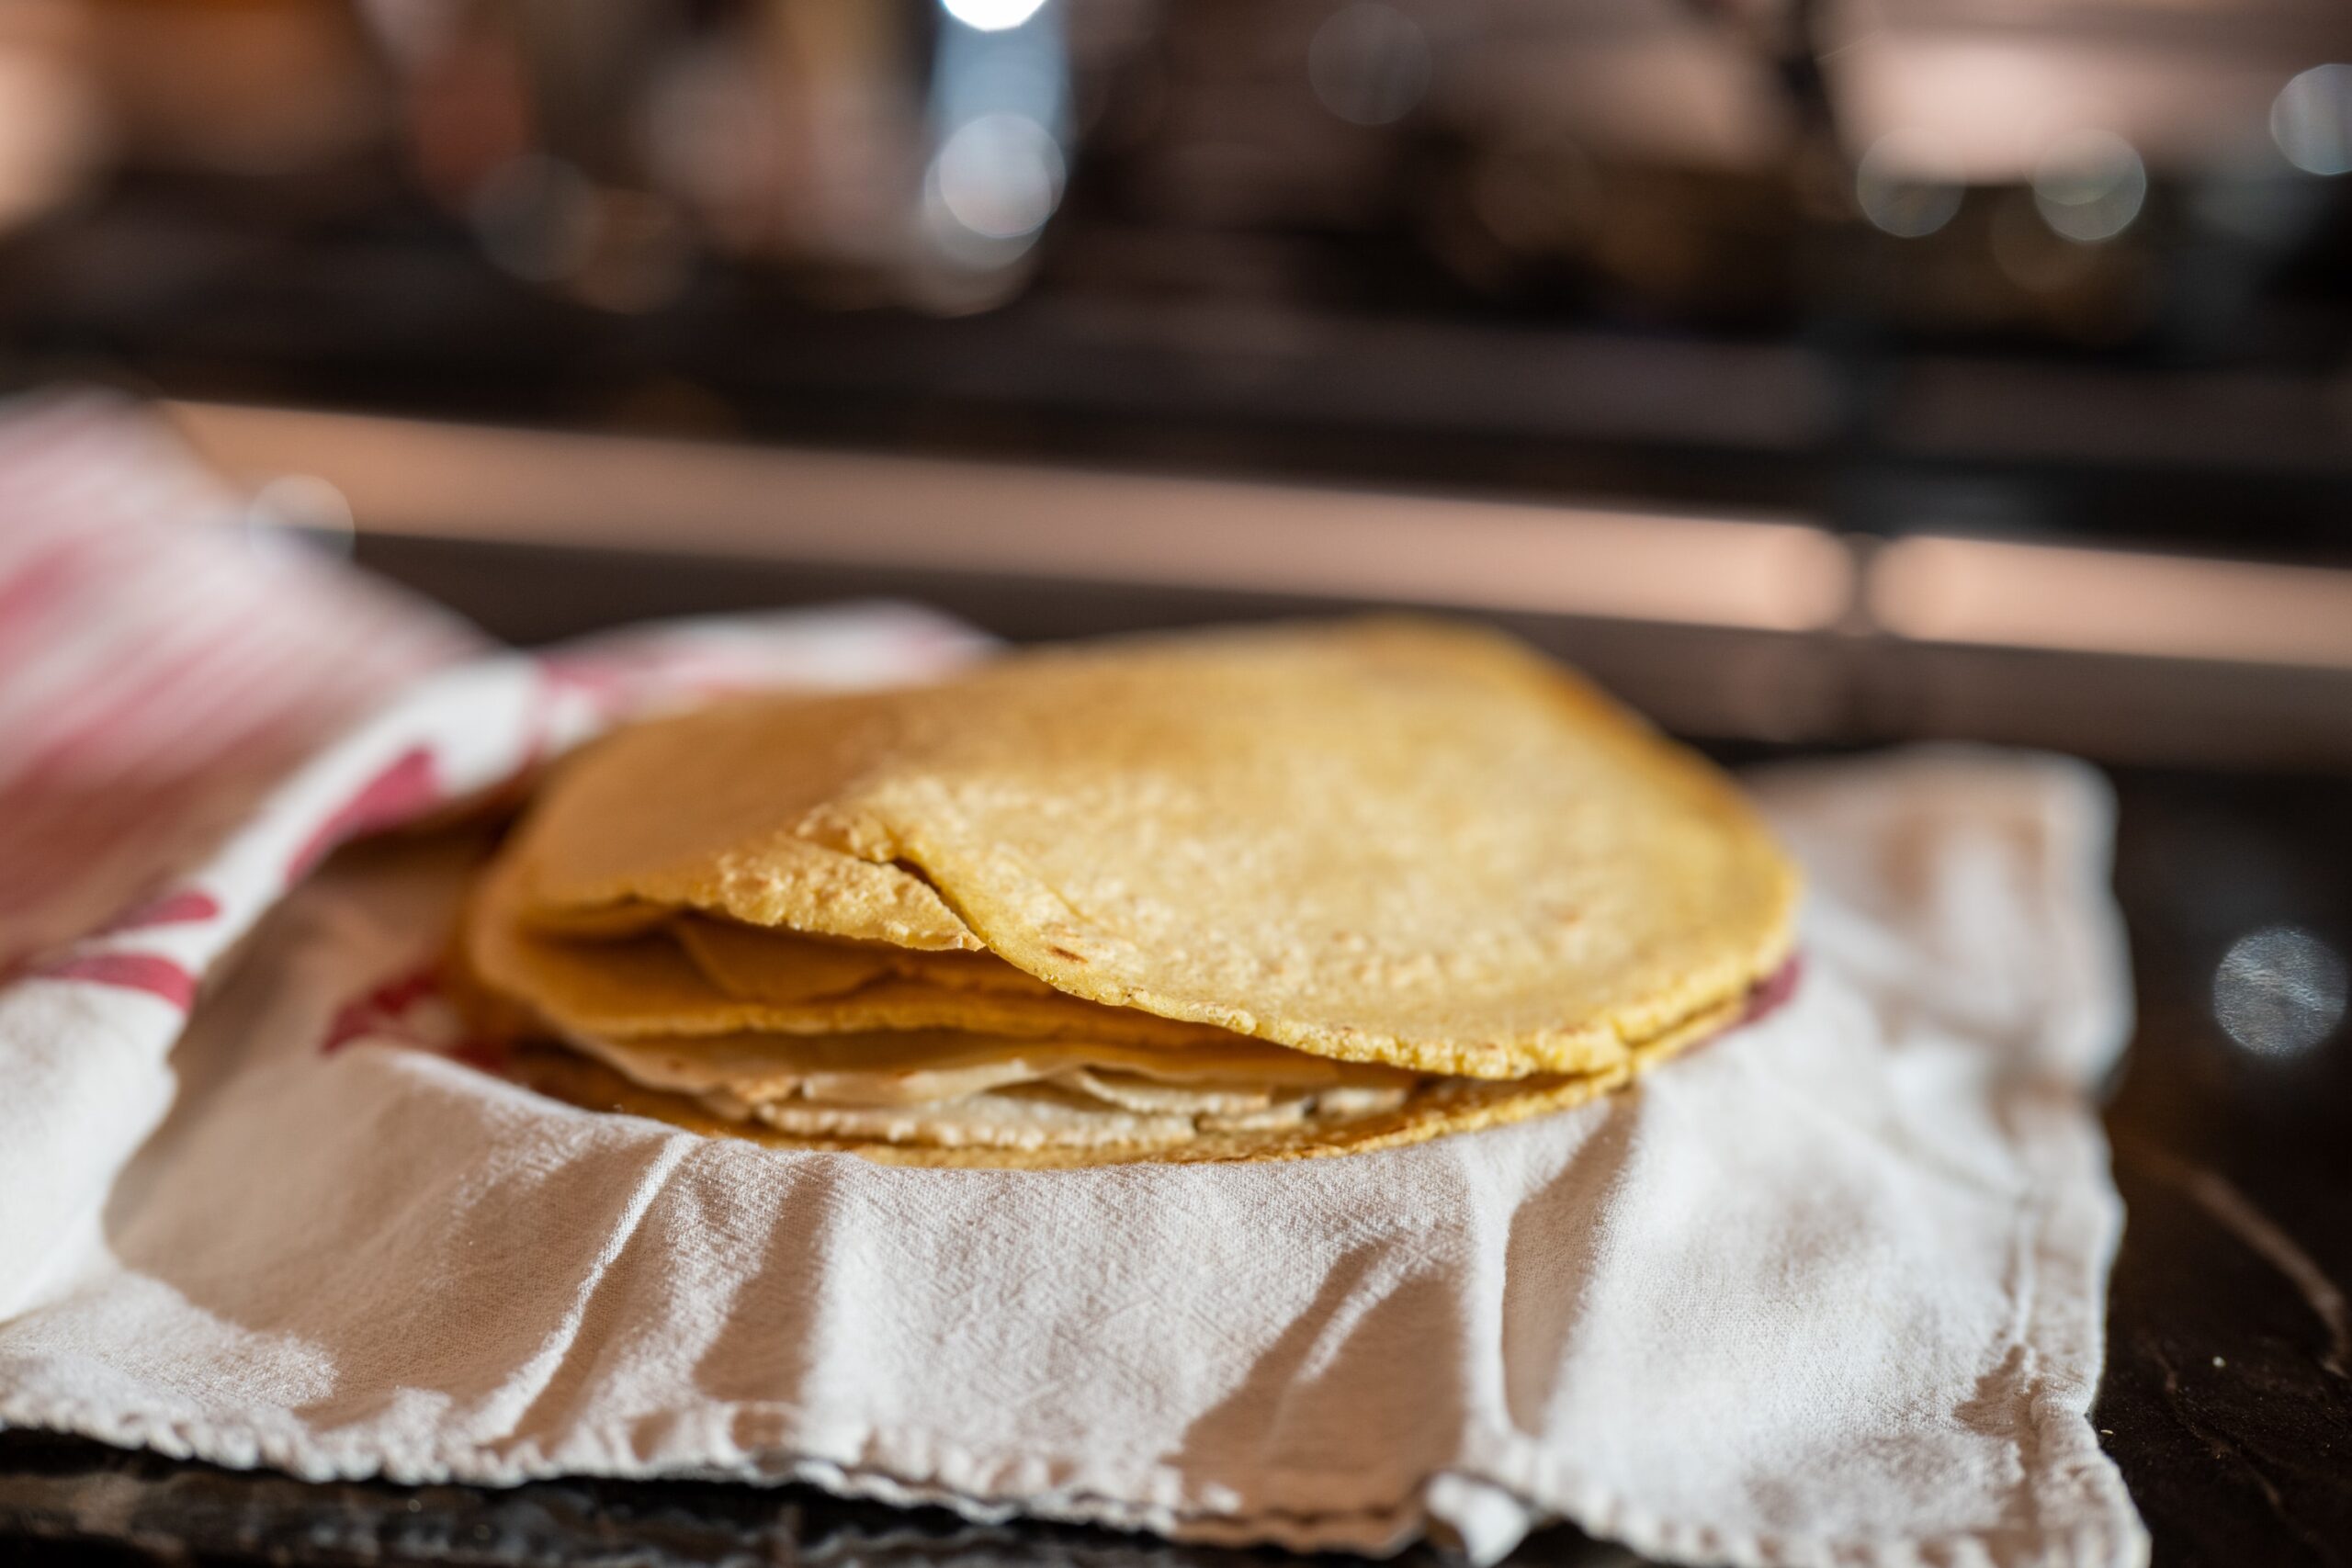 La tortilla, el pan más popular del mundo. Foto de Michael Khan para Unsplash